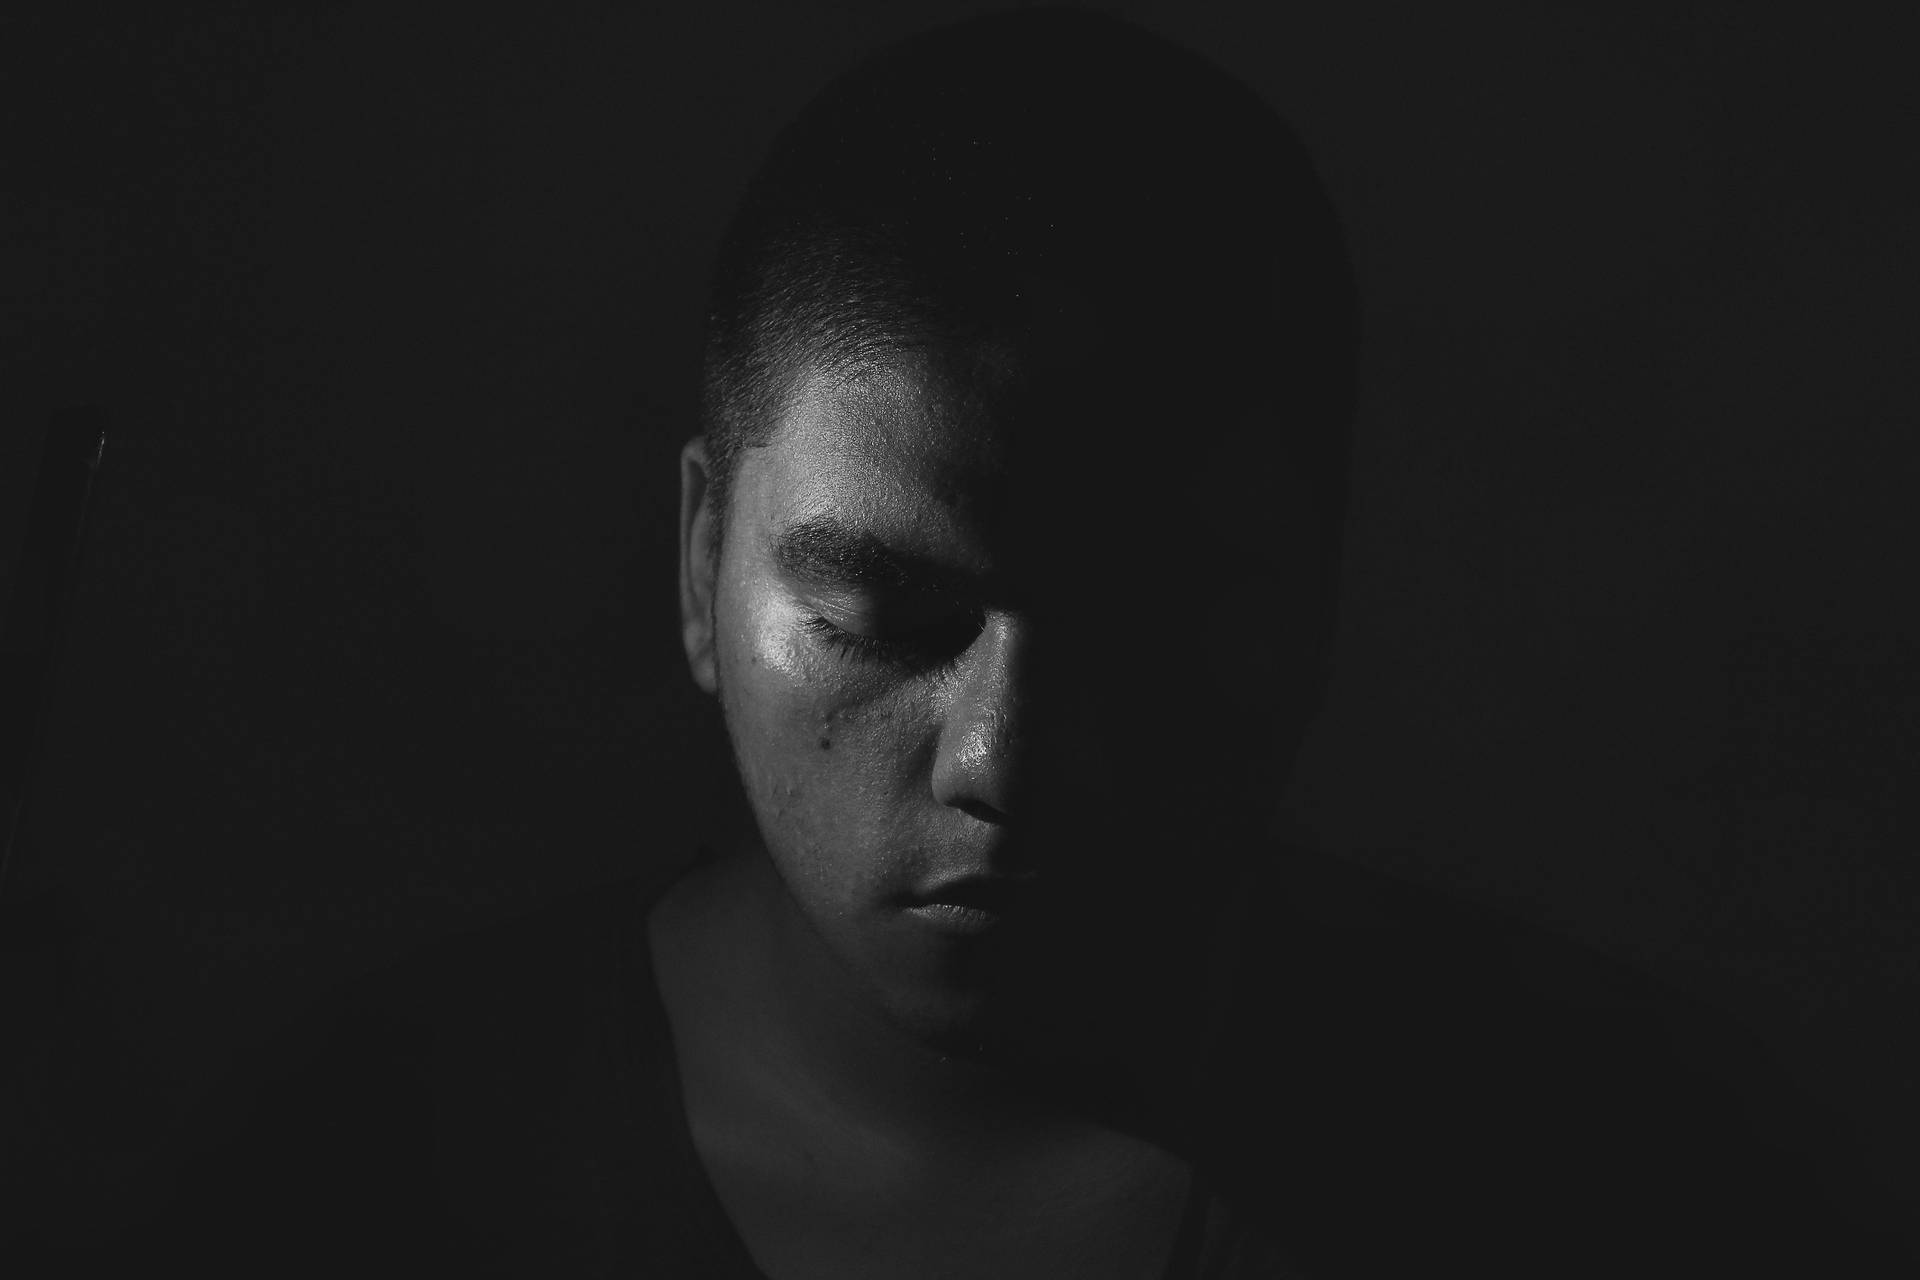 Dark Sad Portrait Of A Man